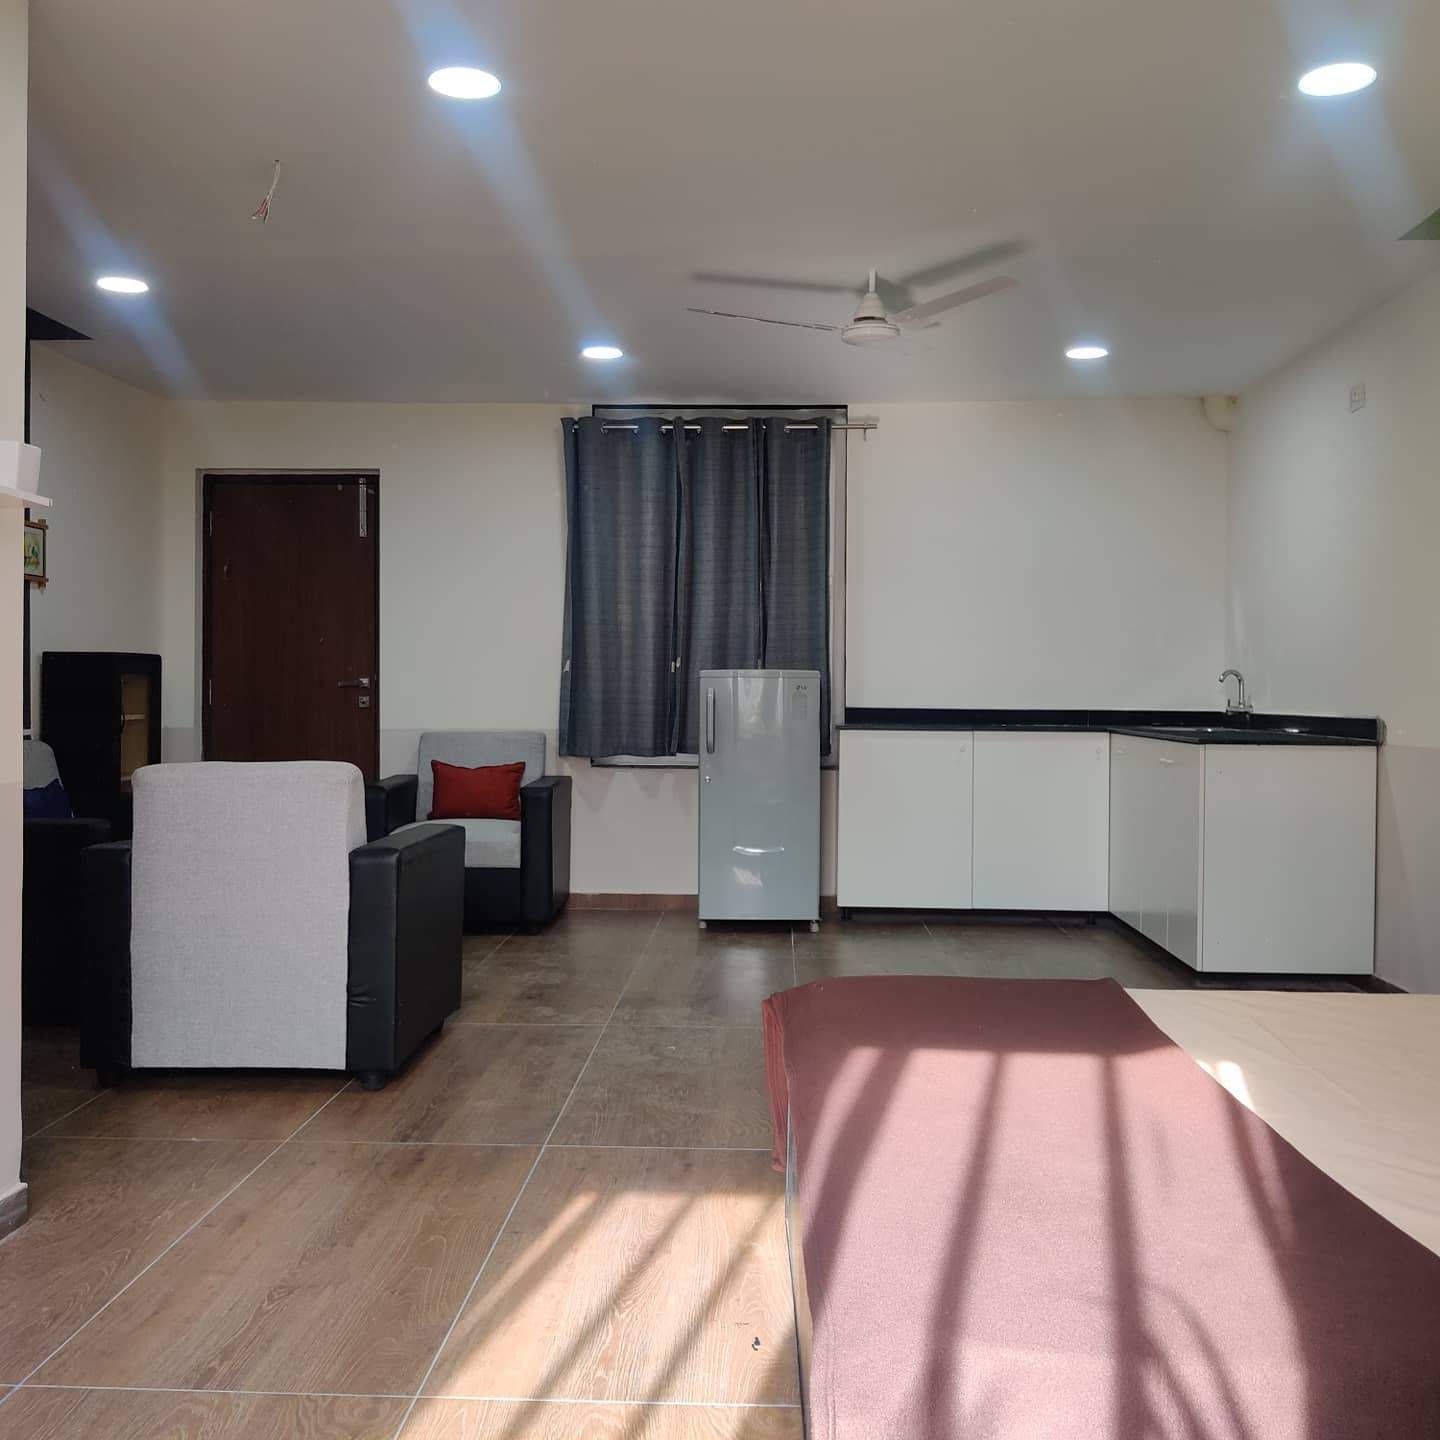 2 Bed/ 2 Bath Apartment/ Flat; 12 sq. ft. carpet area, Furnished for rent @Lanco Hills Private Rd, Janmabhoomi Colony, Sai Aishwarya Layout, Chitrapuri Colony, Khajaguda, Telangana 500089